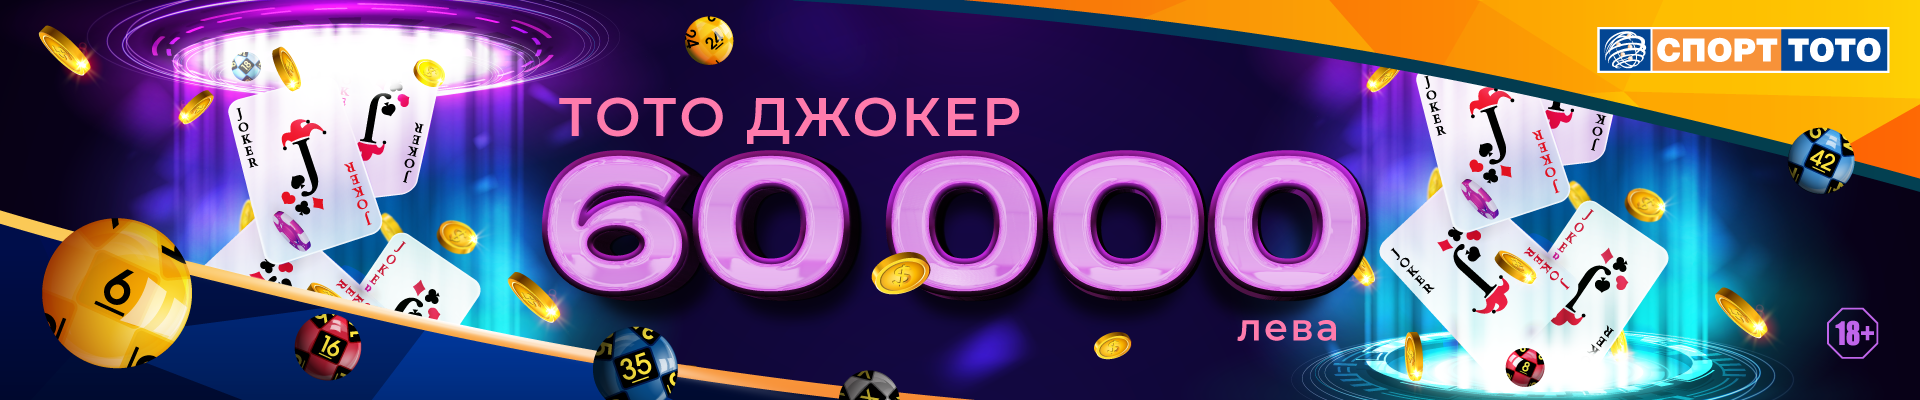 Тото Джокер 60 000